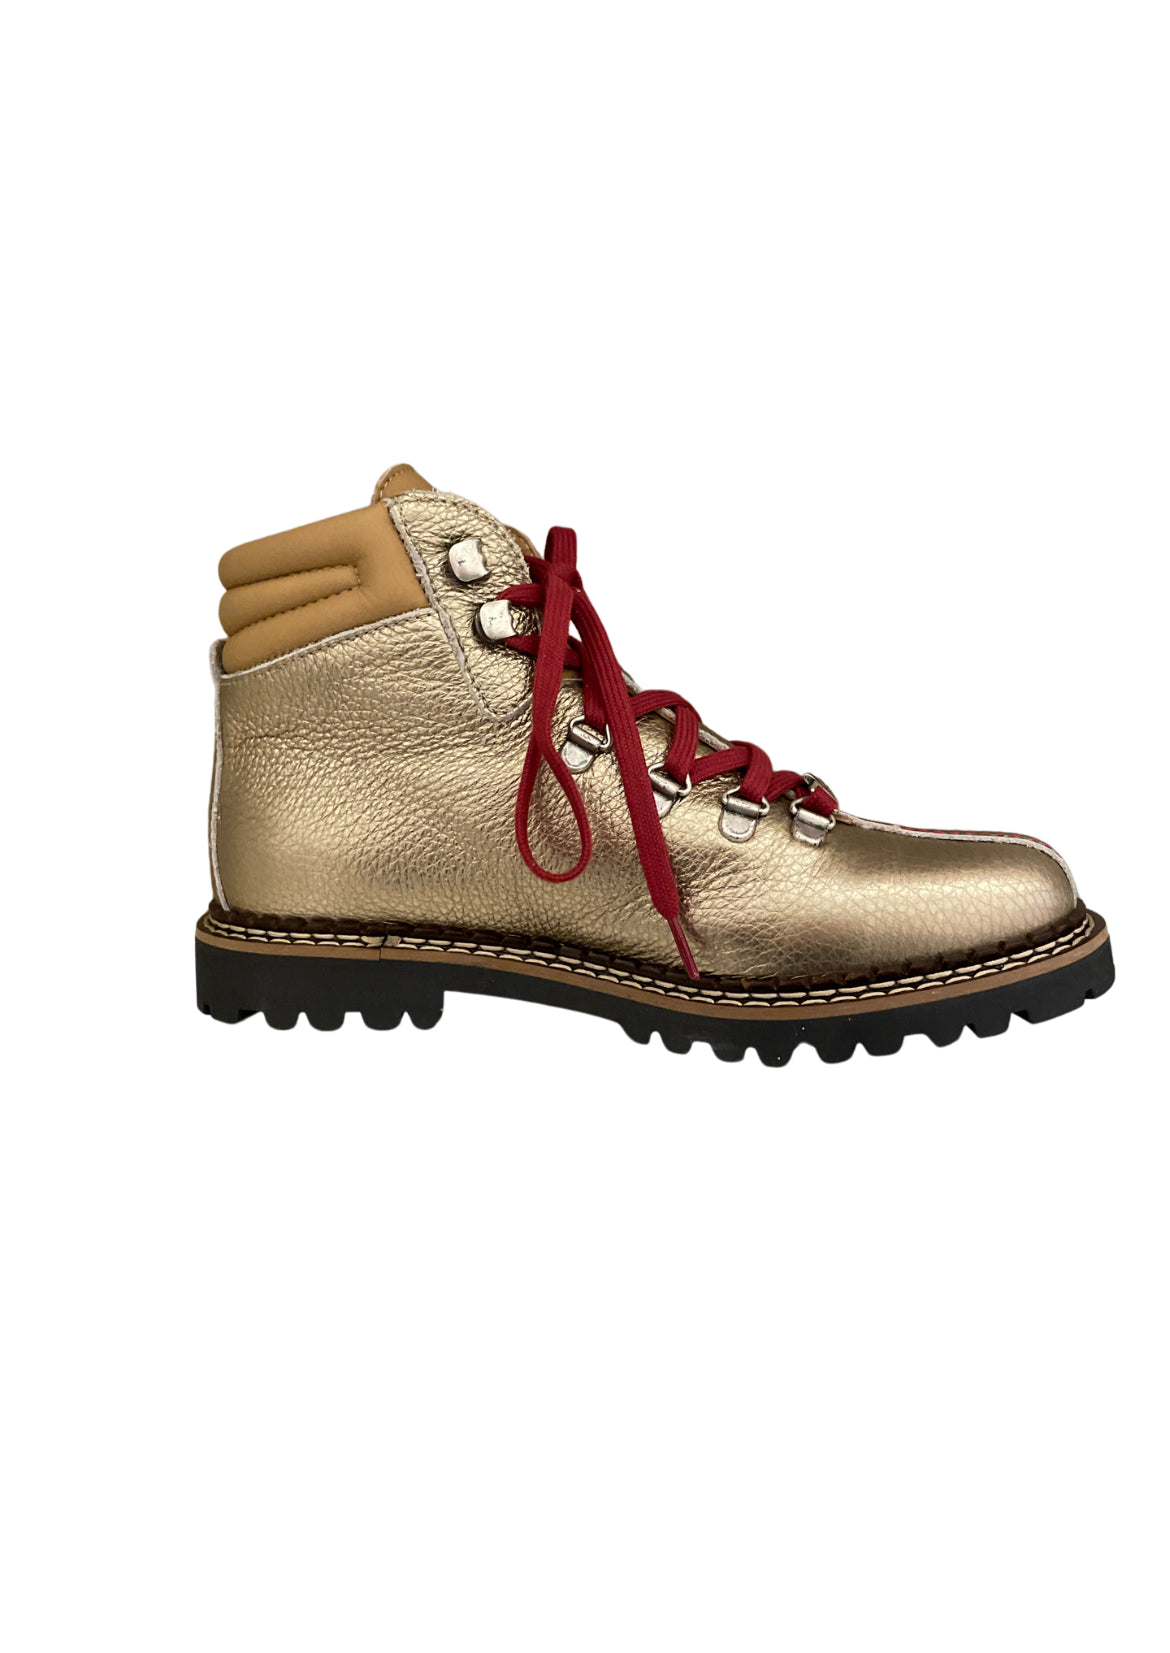 Ammann Town III Metallic Gold Pebble Leather Ankle Boots